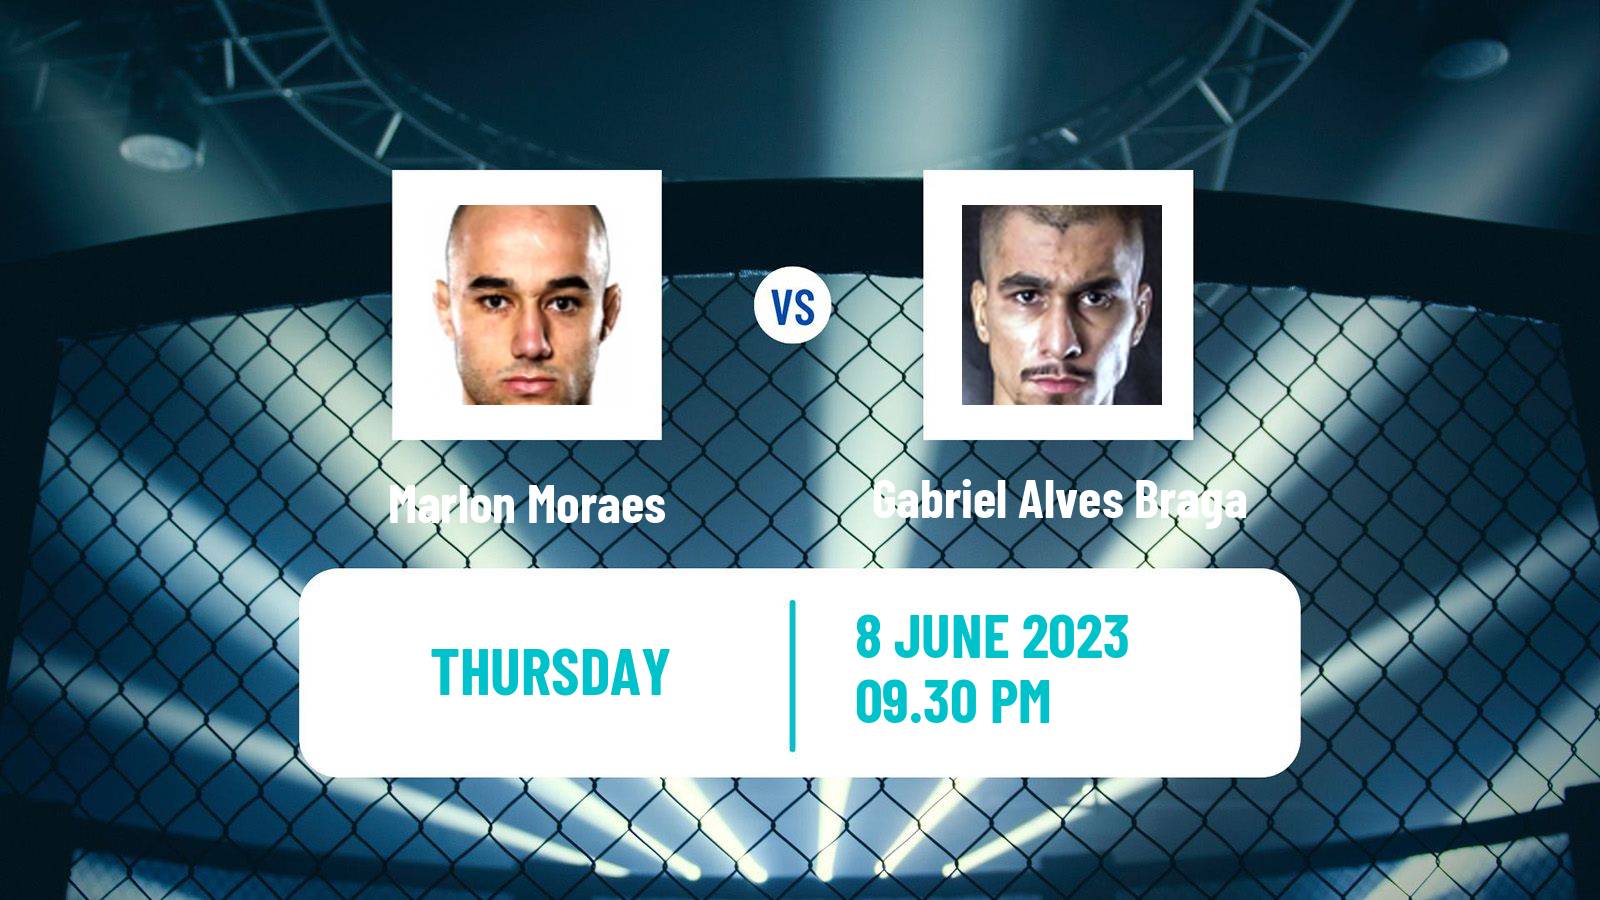 MMA Featherweight Pfl Men Marlon Moraes - Gabriel Alves Braga